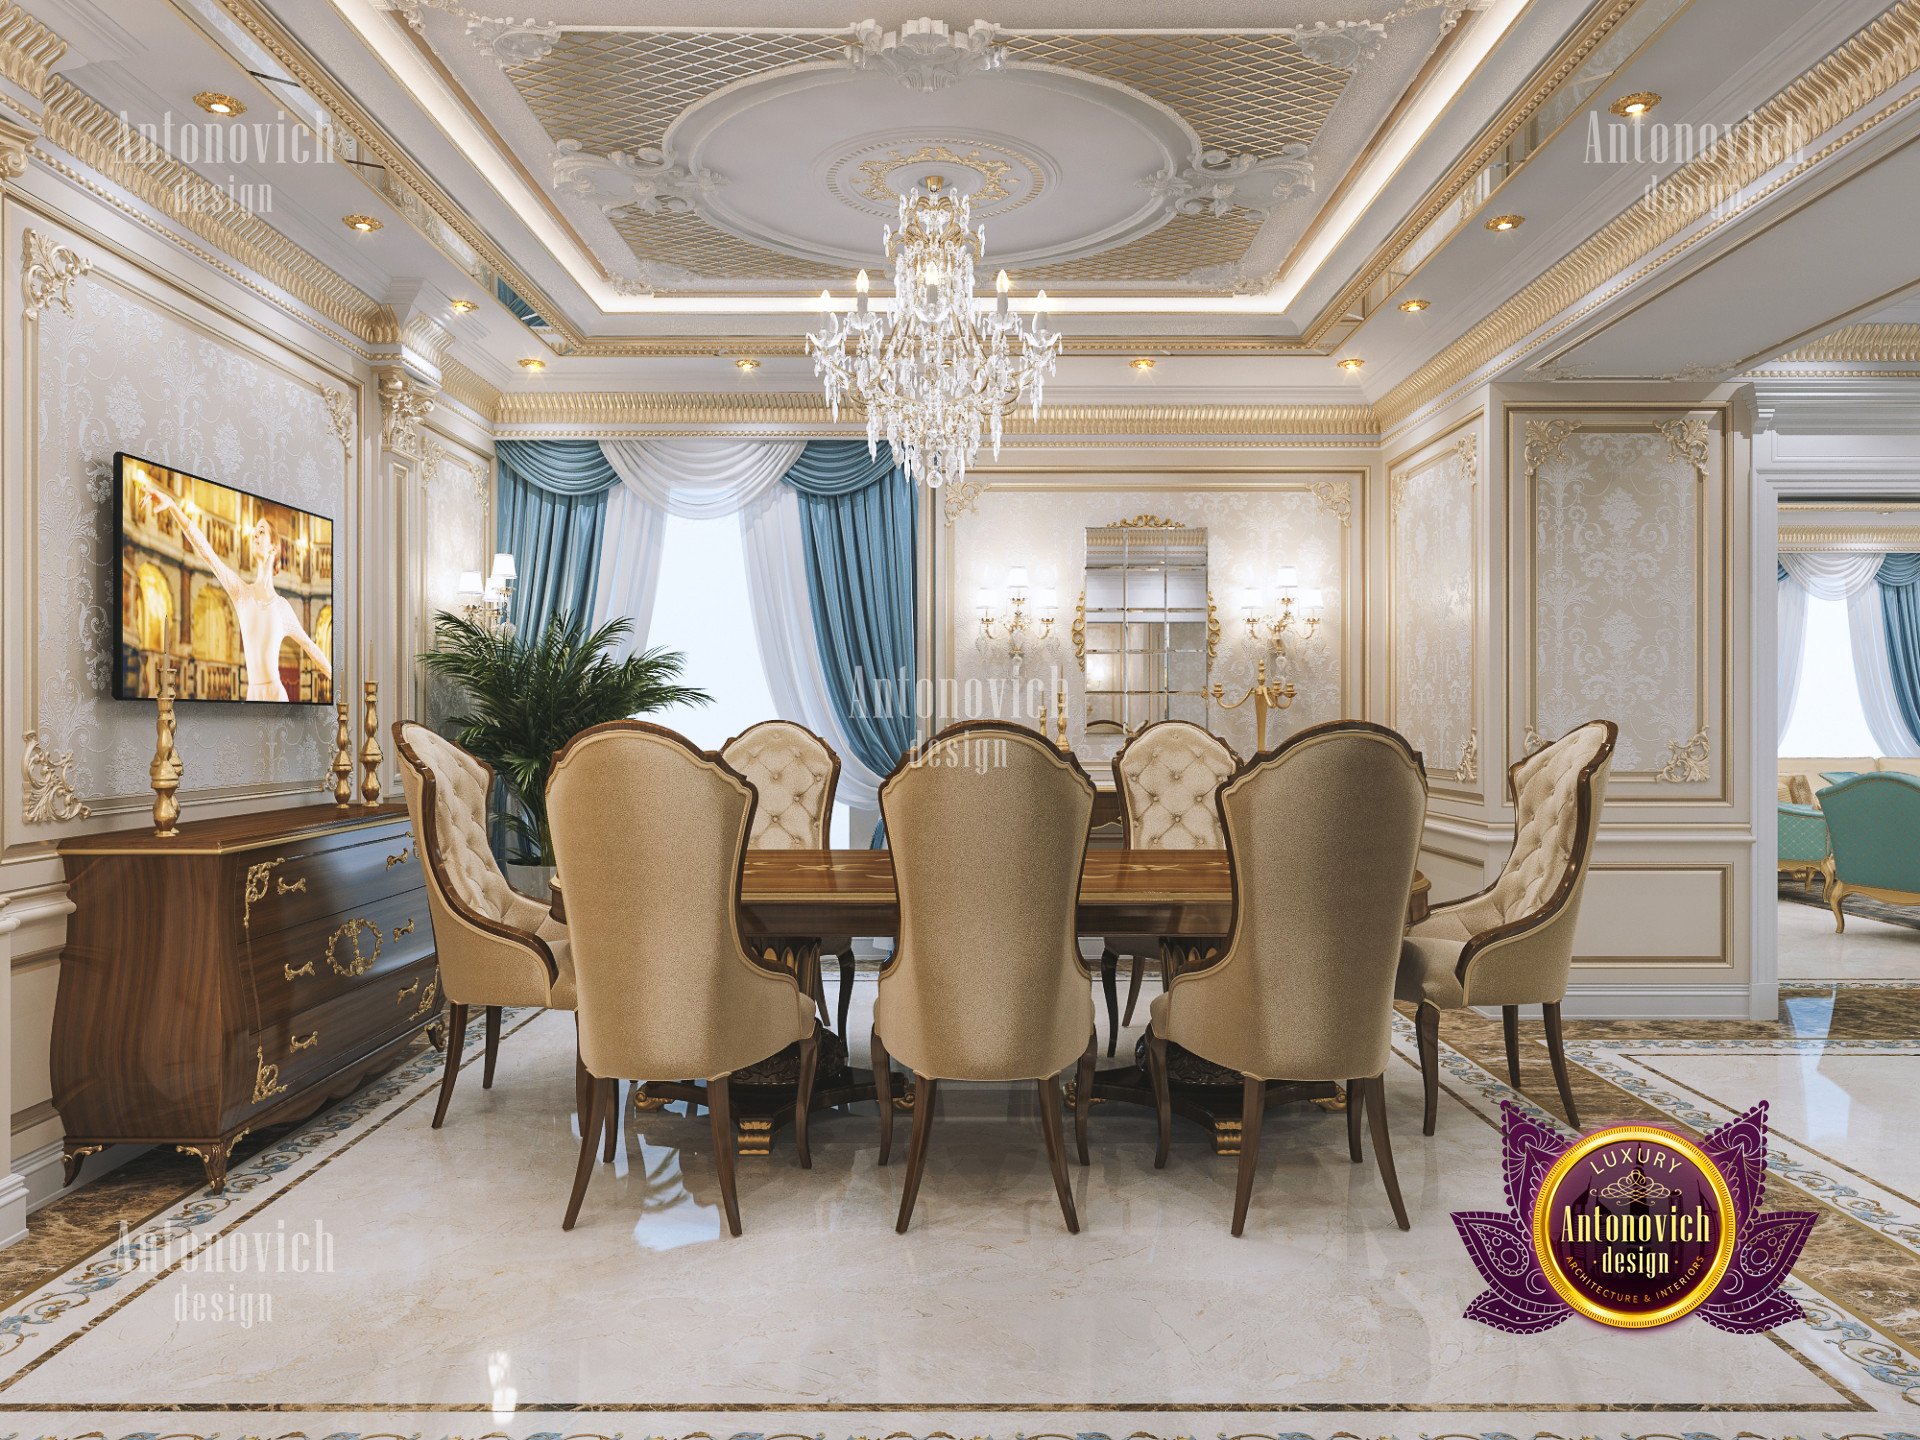 Classic dining room decoration - luxury interior design company in ...